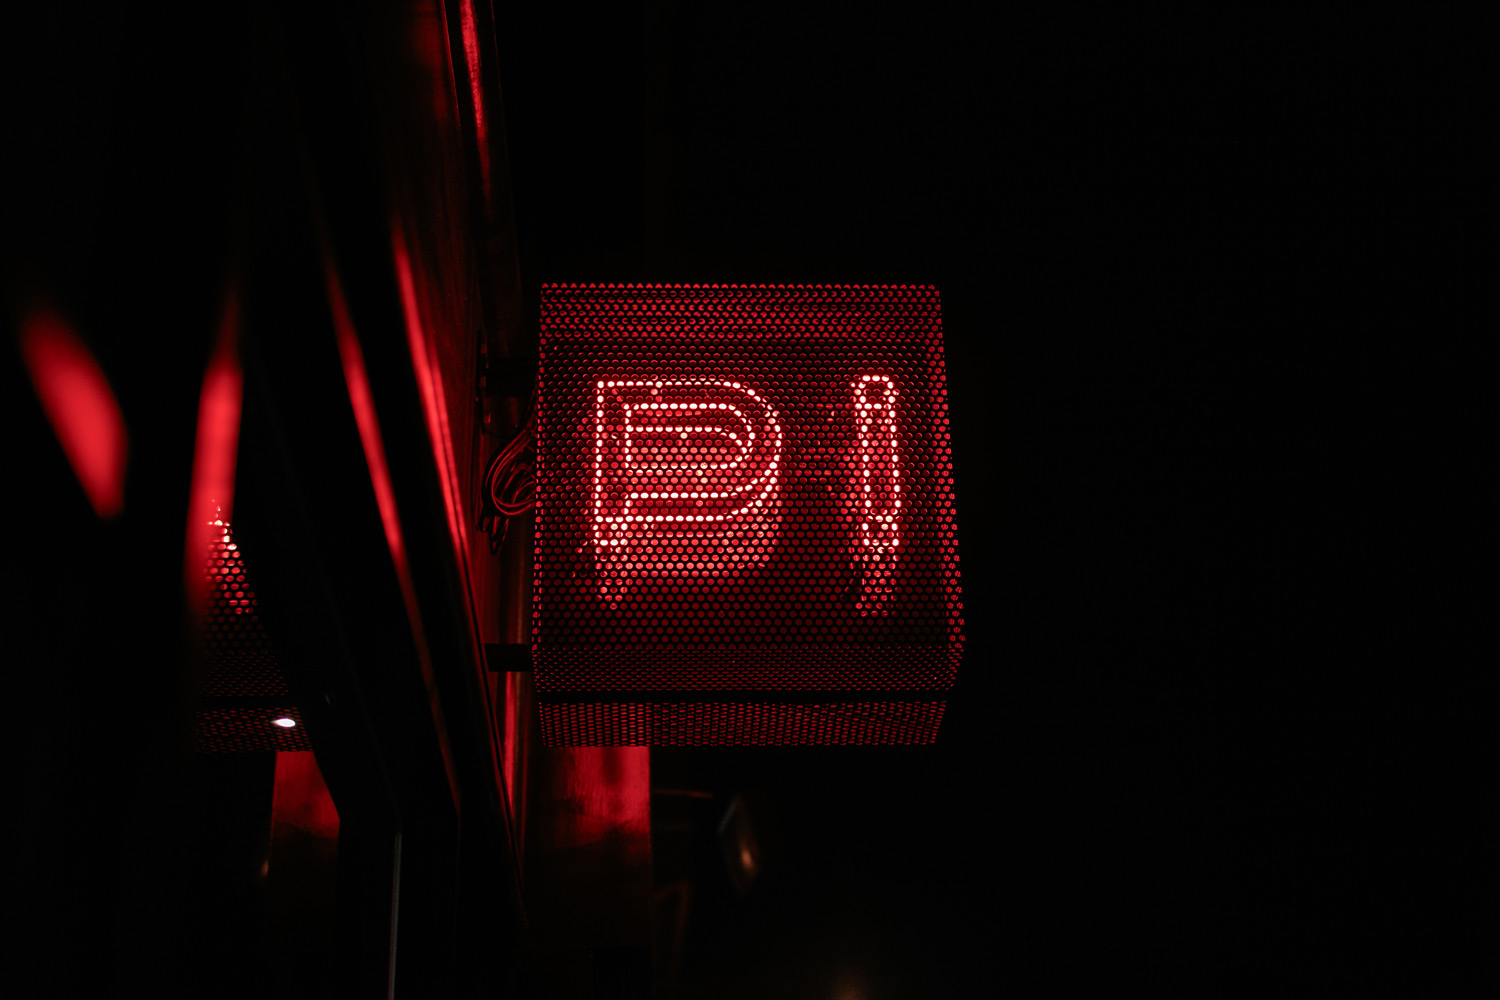 Pi Pizza Dublin, shot of neon sign on Dublin's George's street